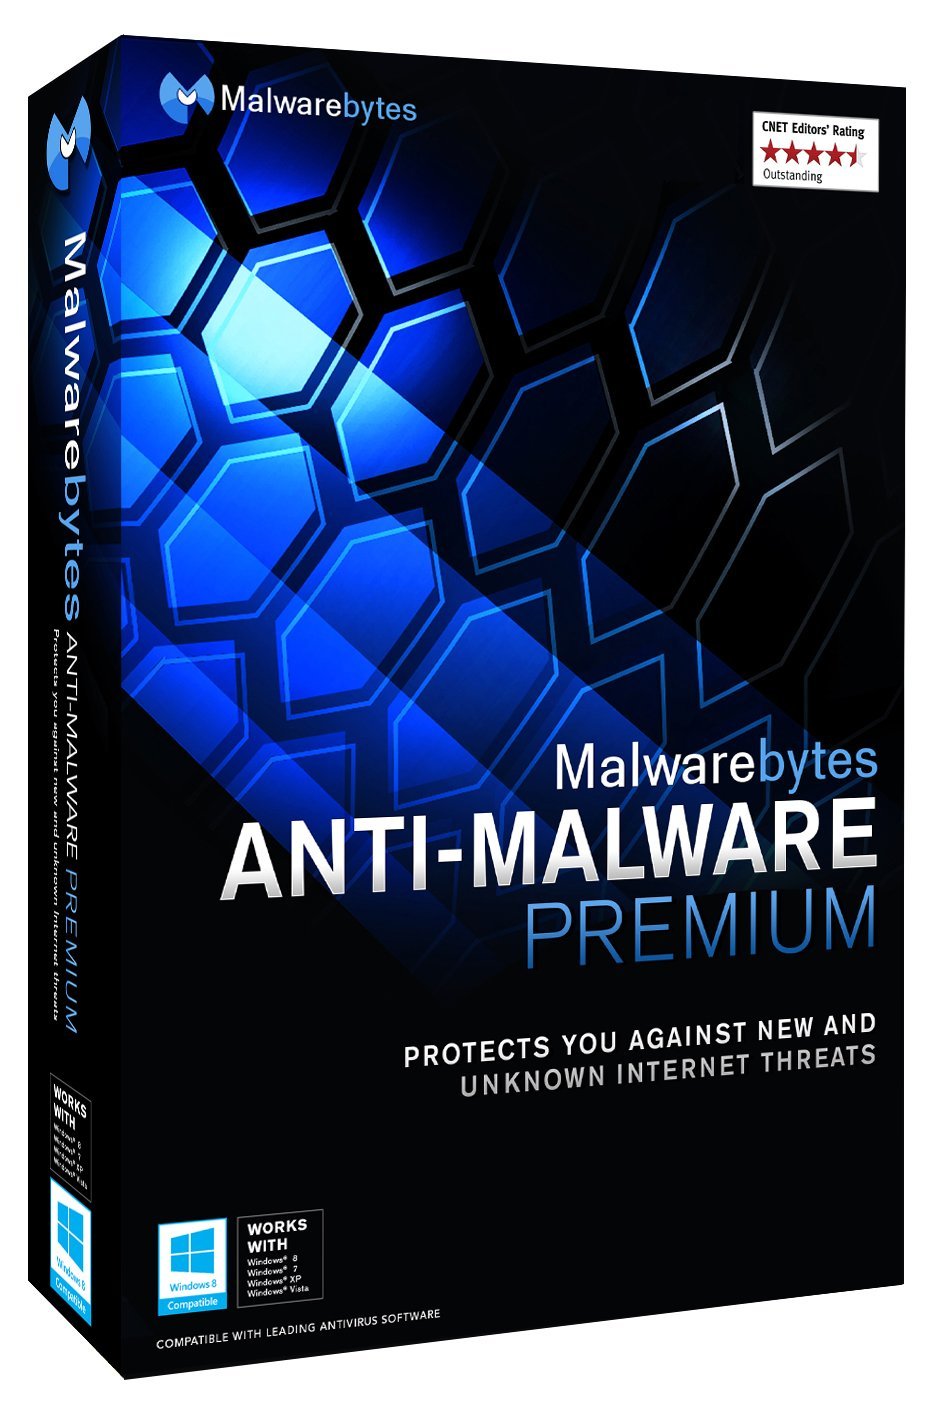 malwarebytes anti malware 2.0 4 free download